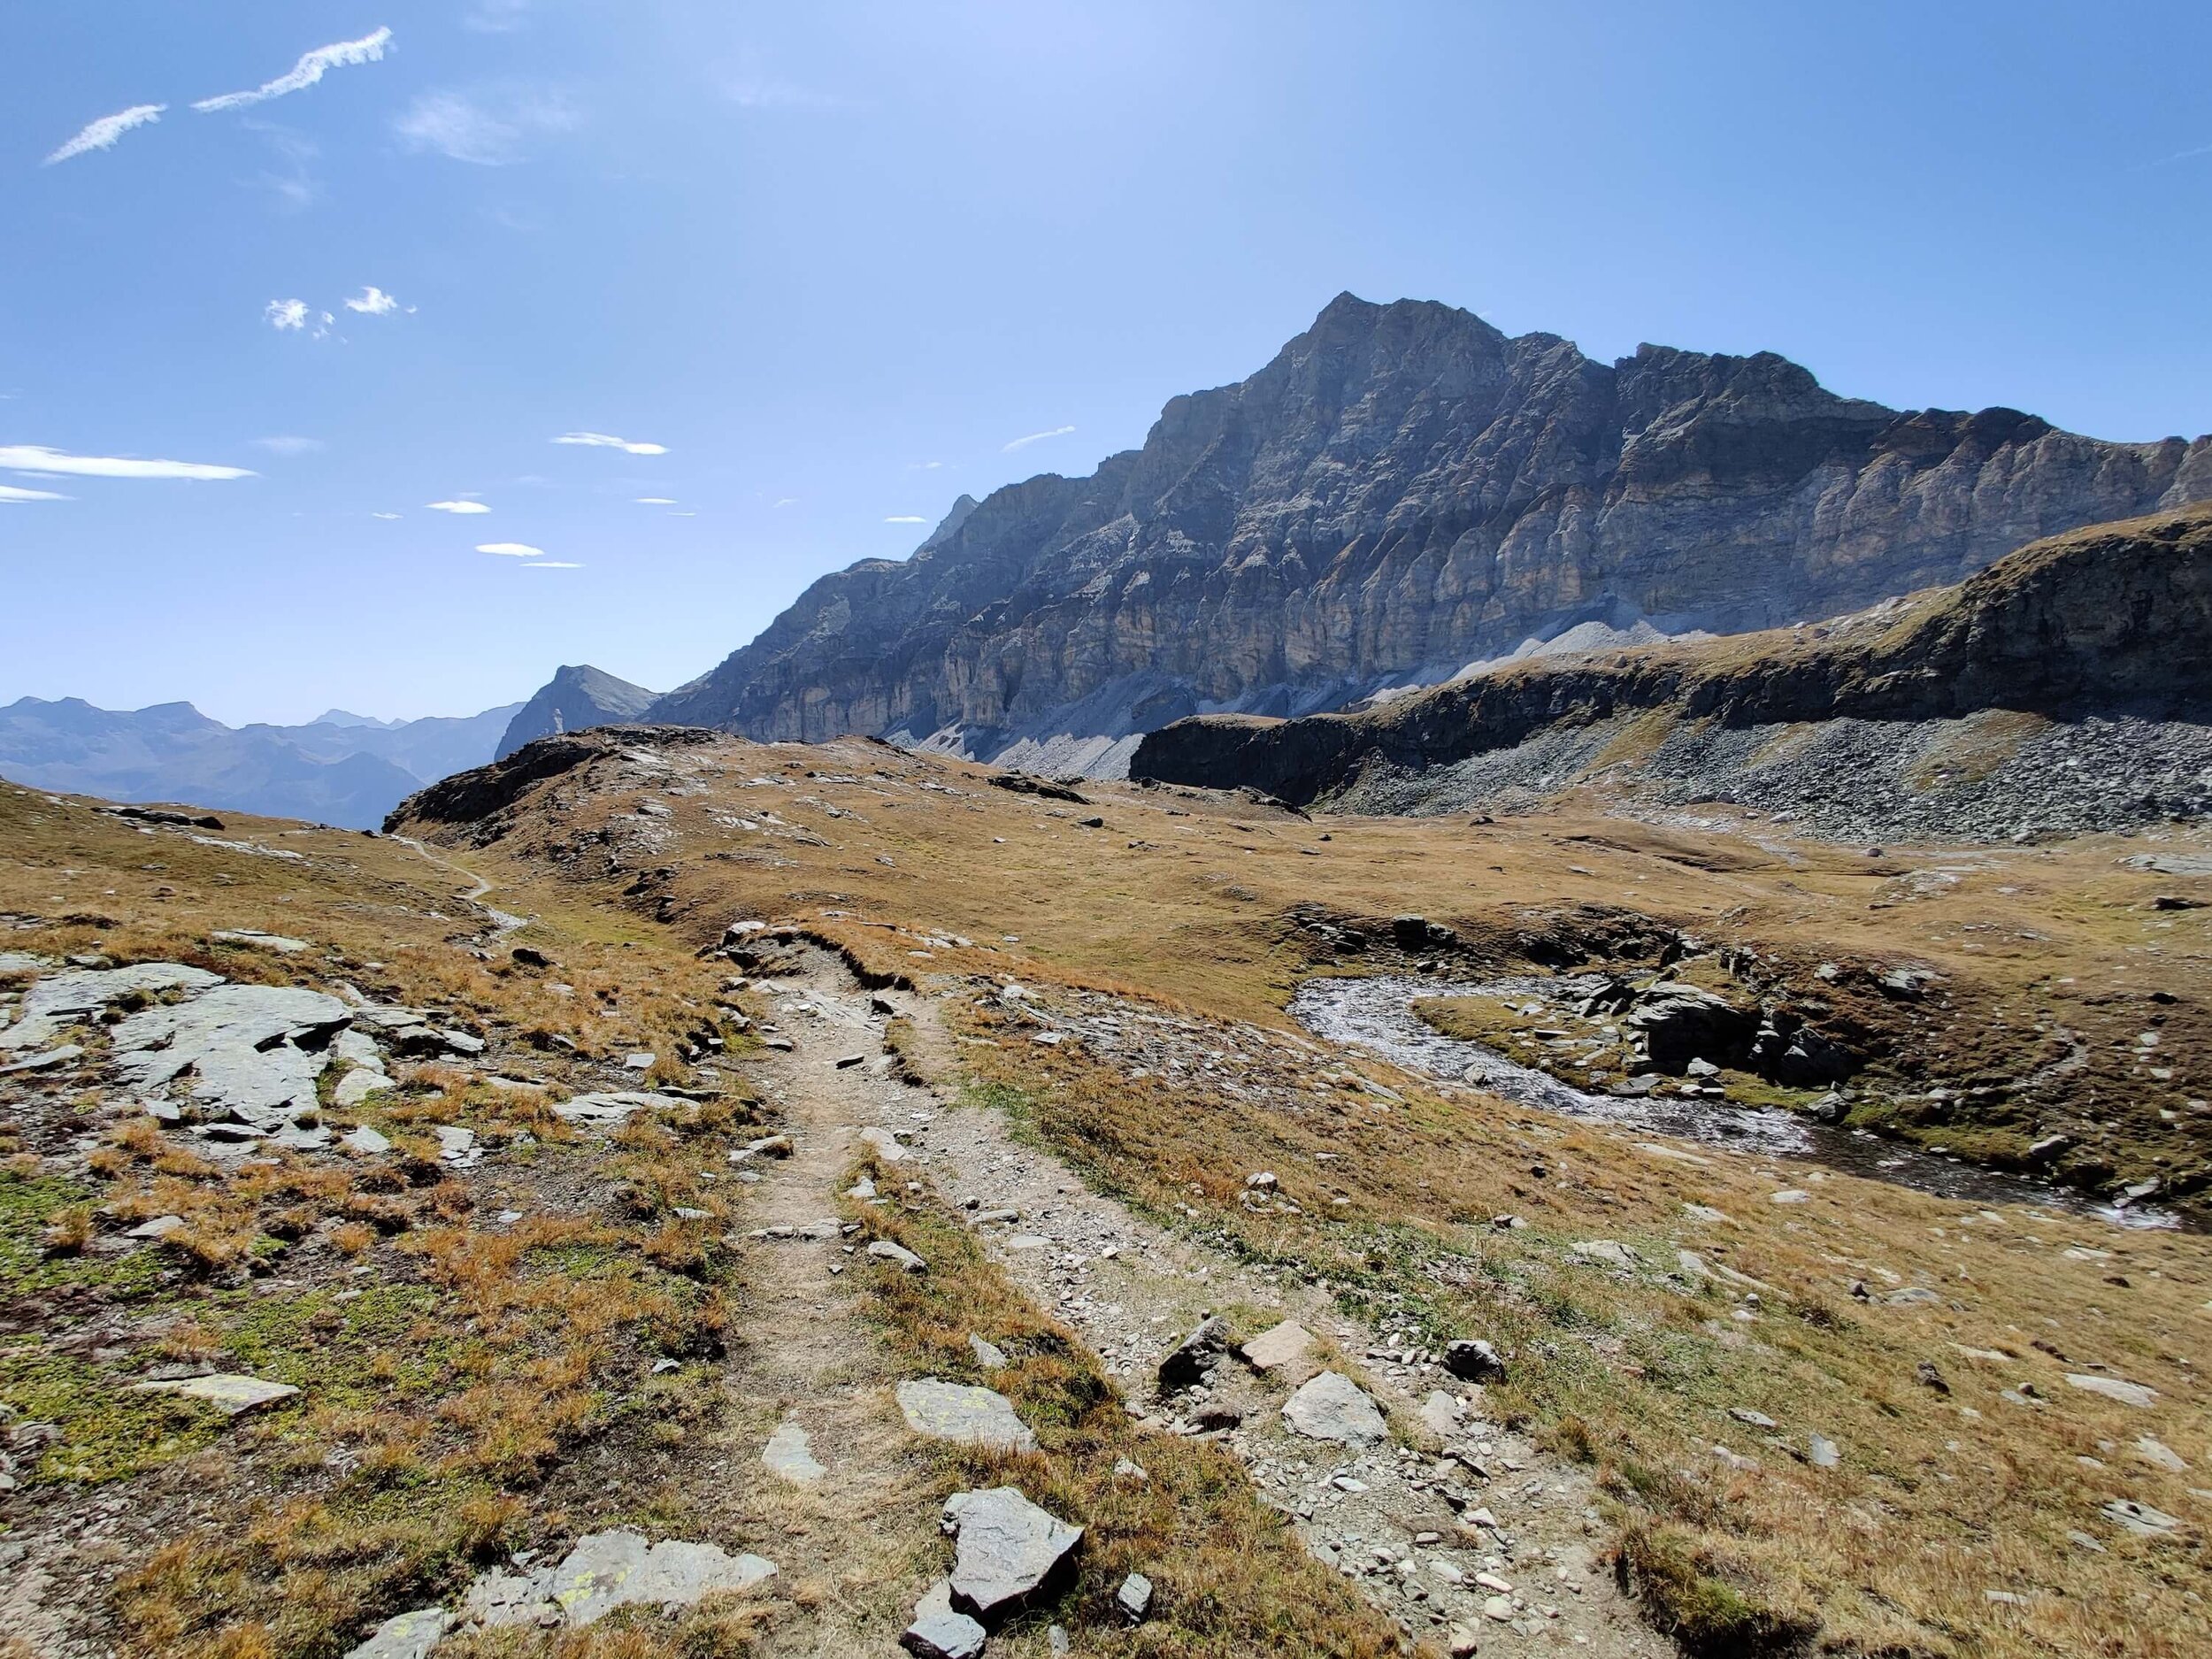 Trail follows alongside Cime Bianche range